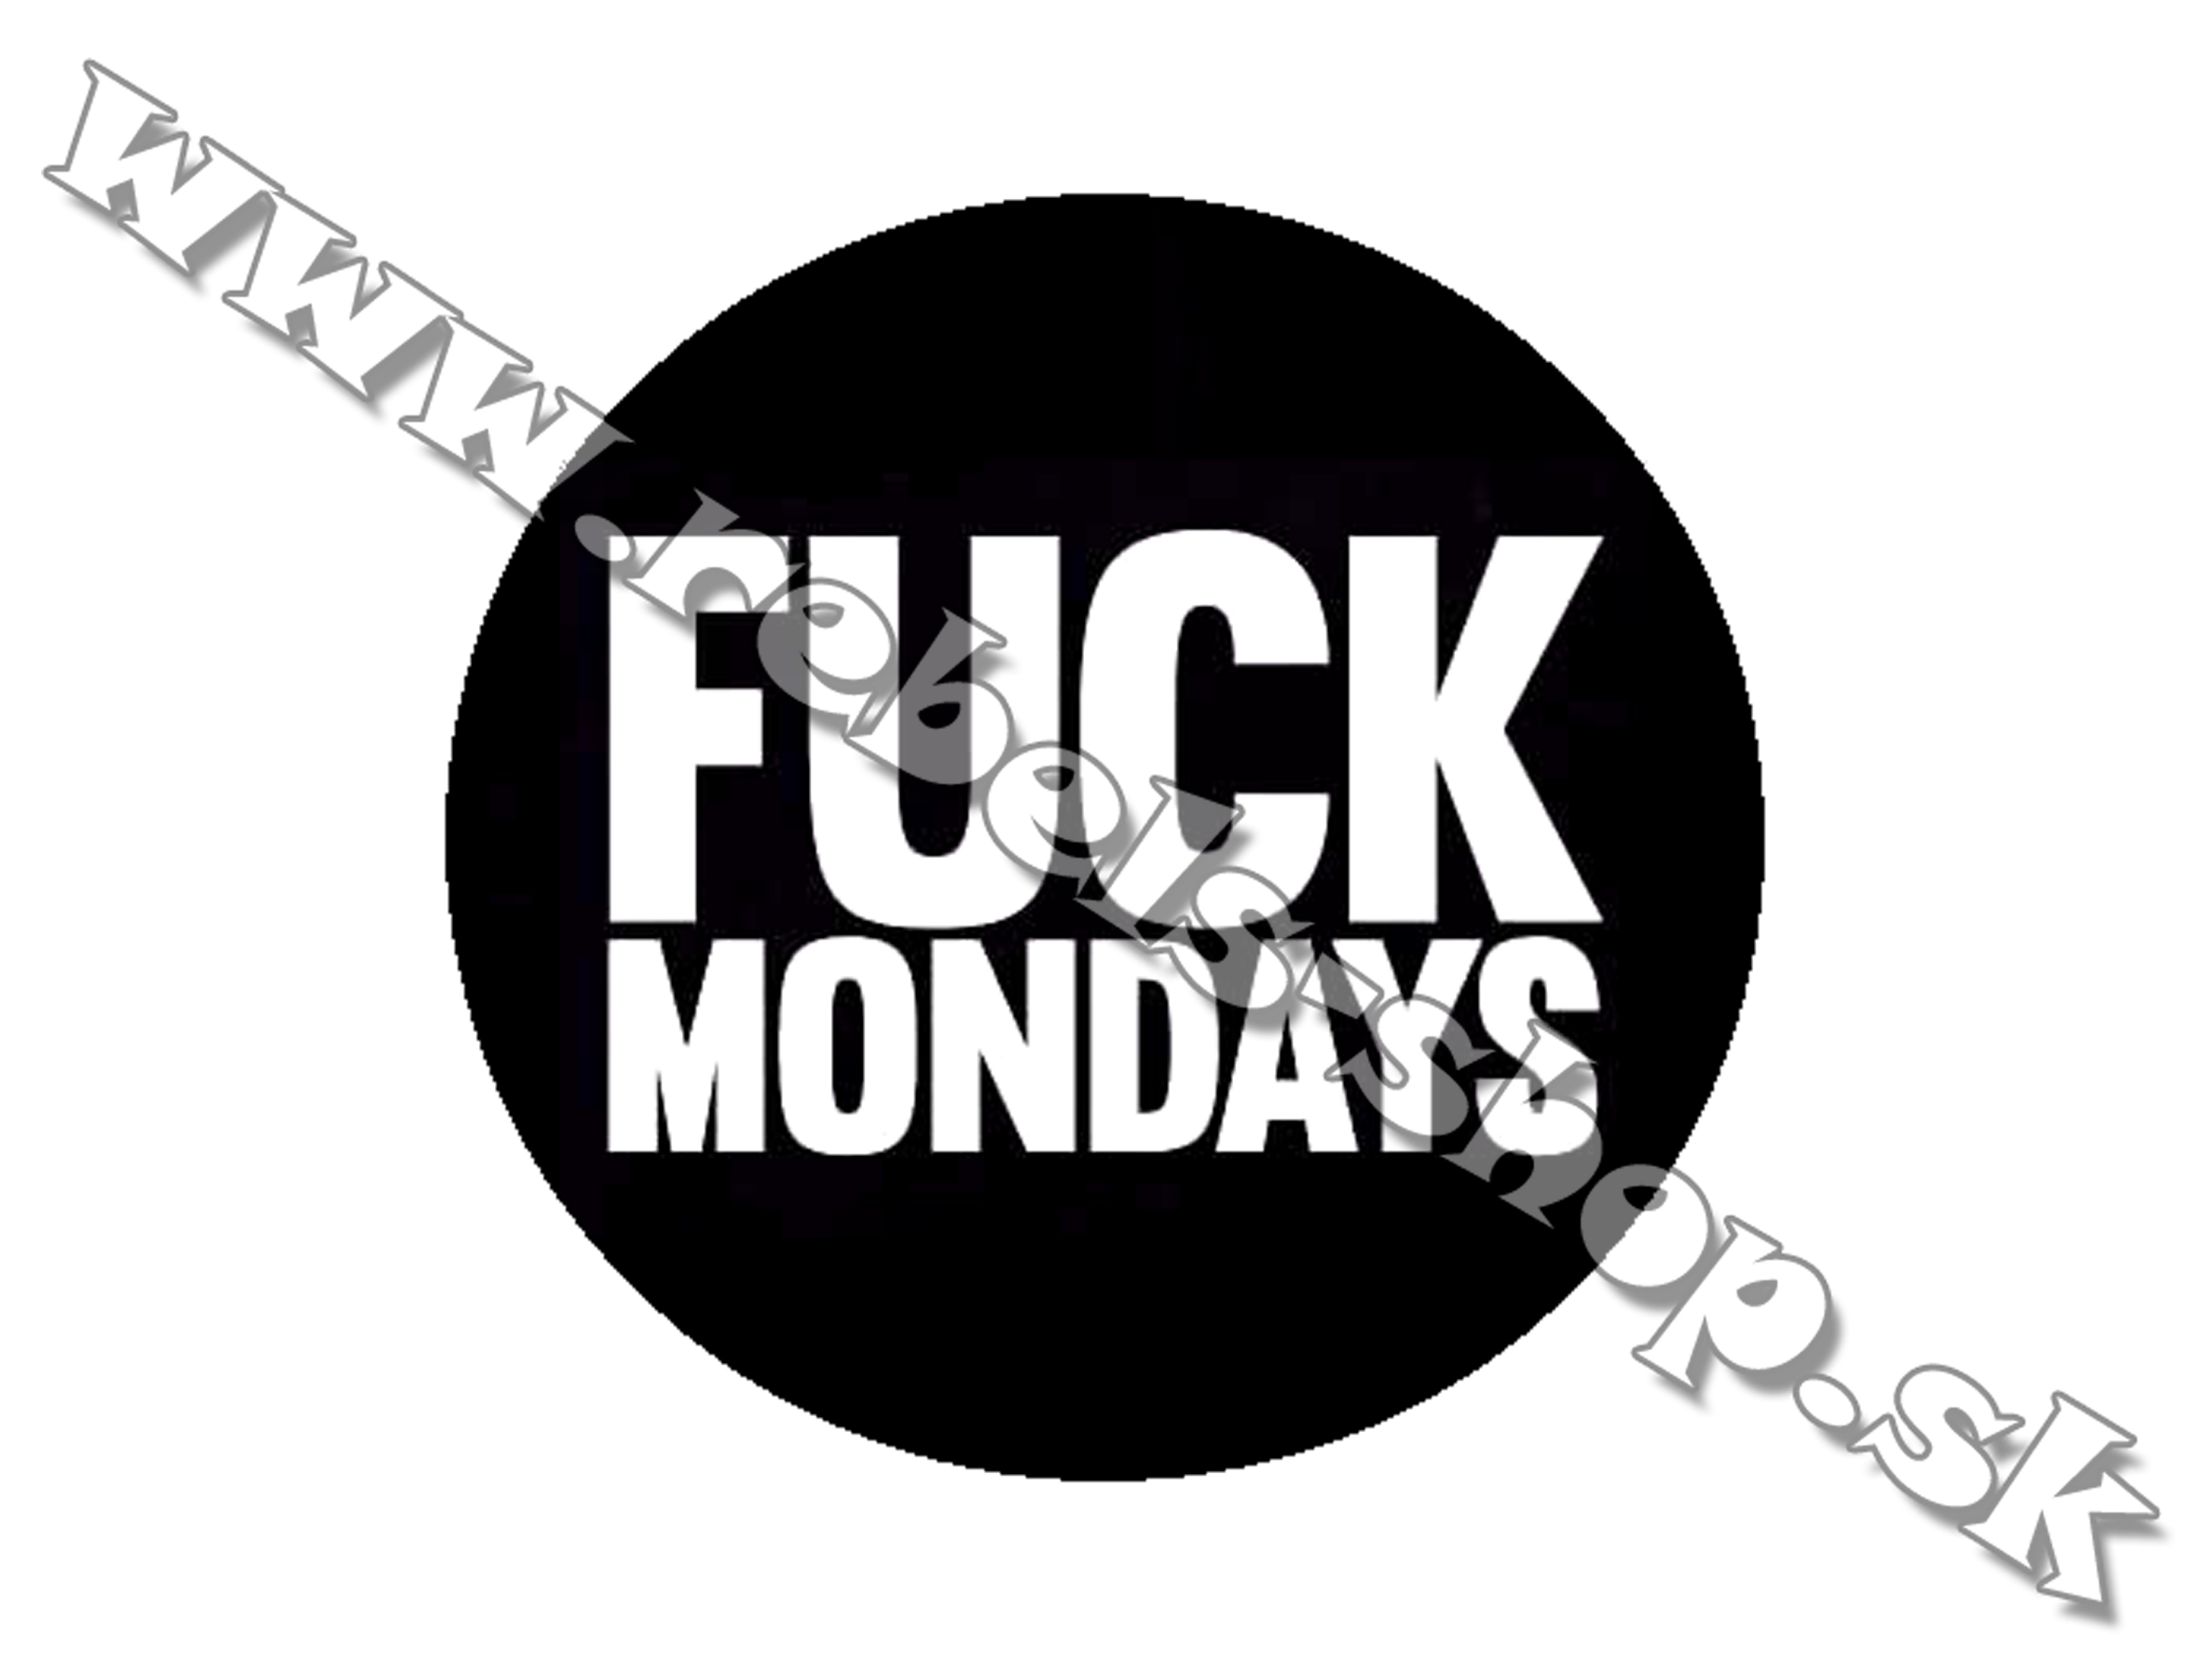 Odznak "Fuck Mondays"